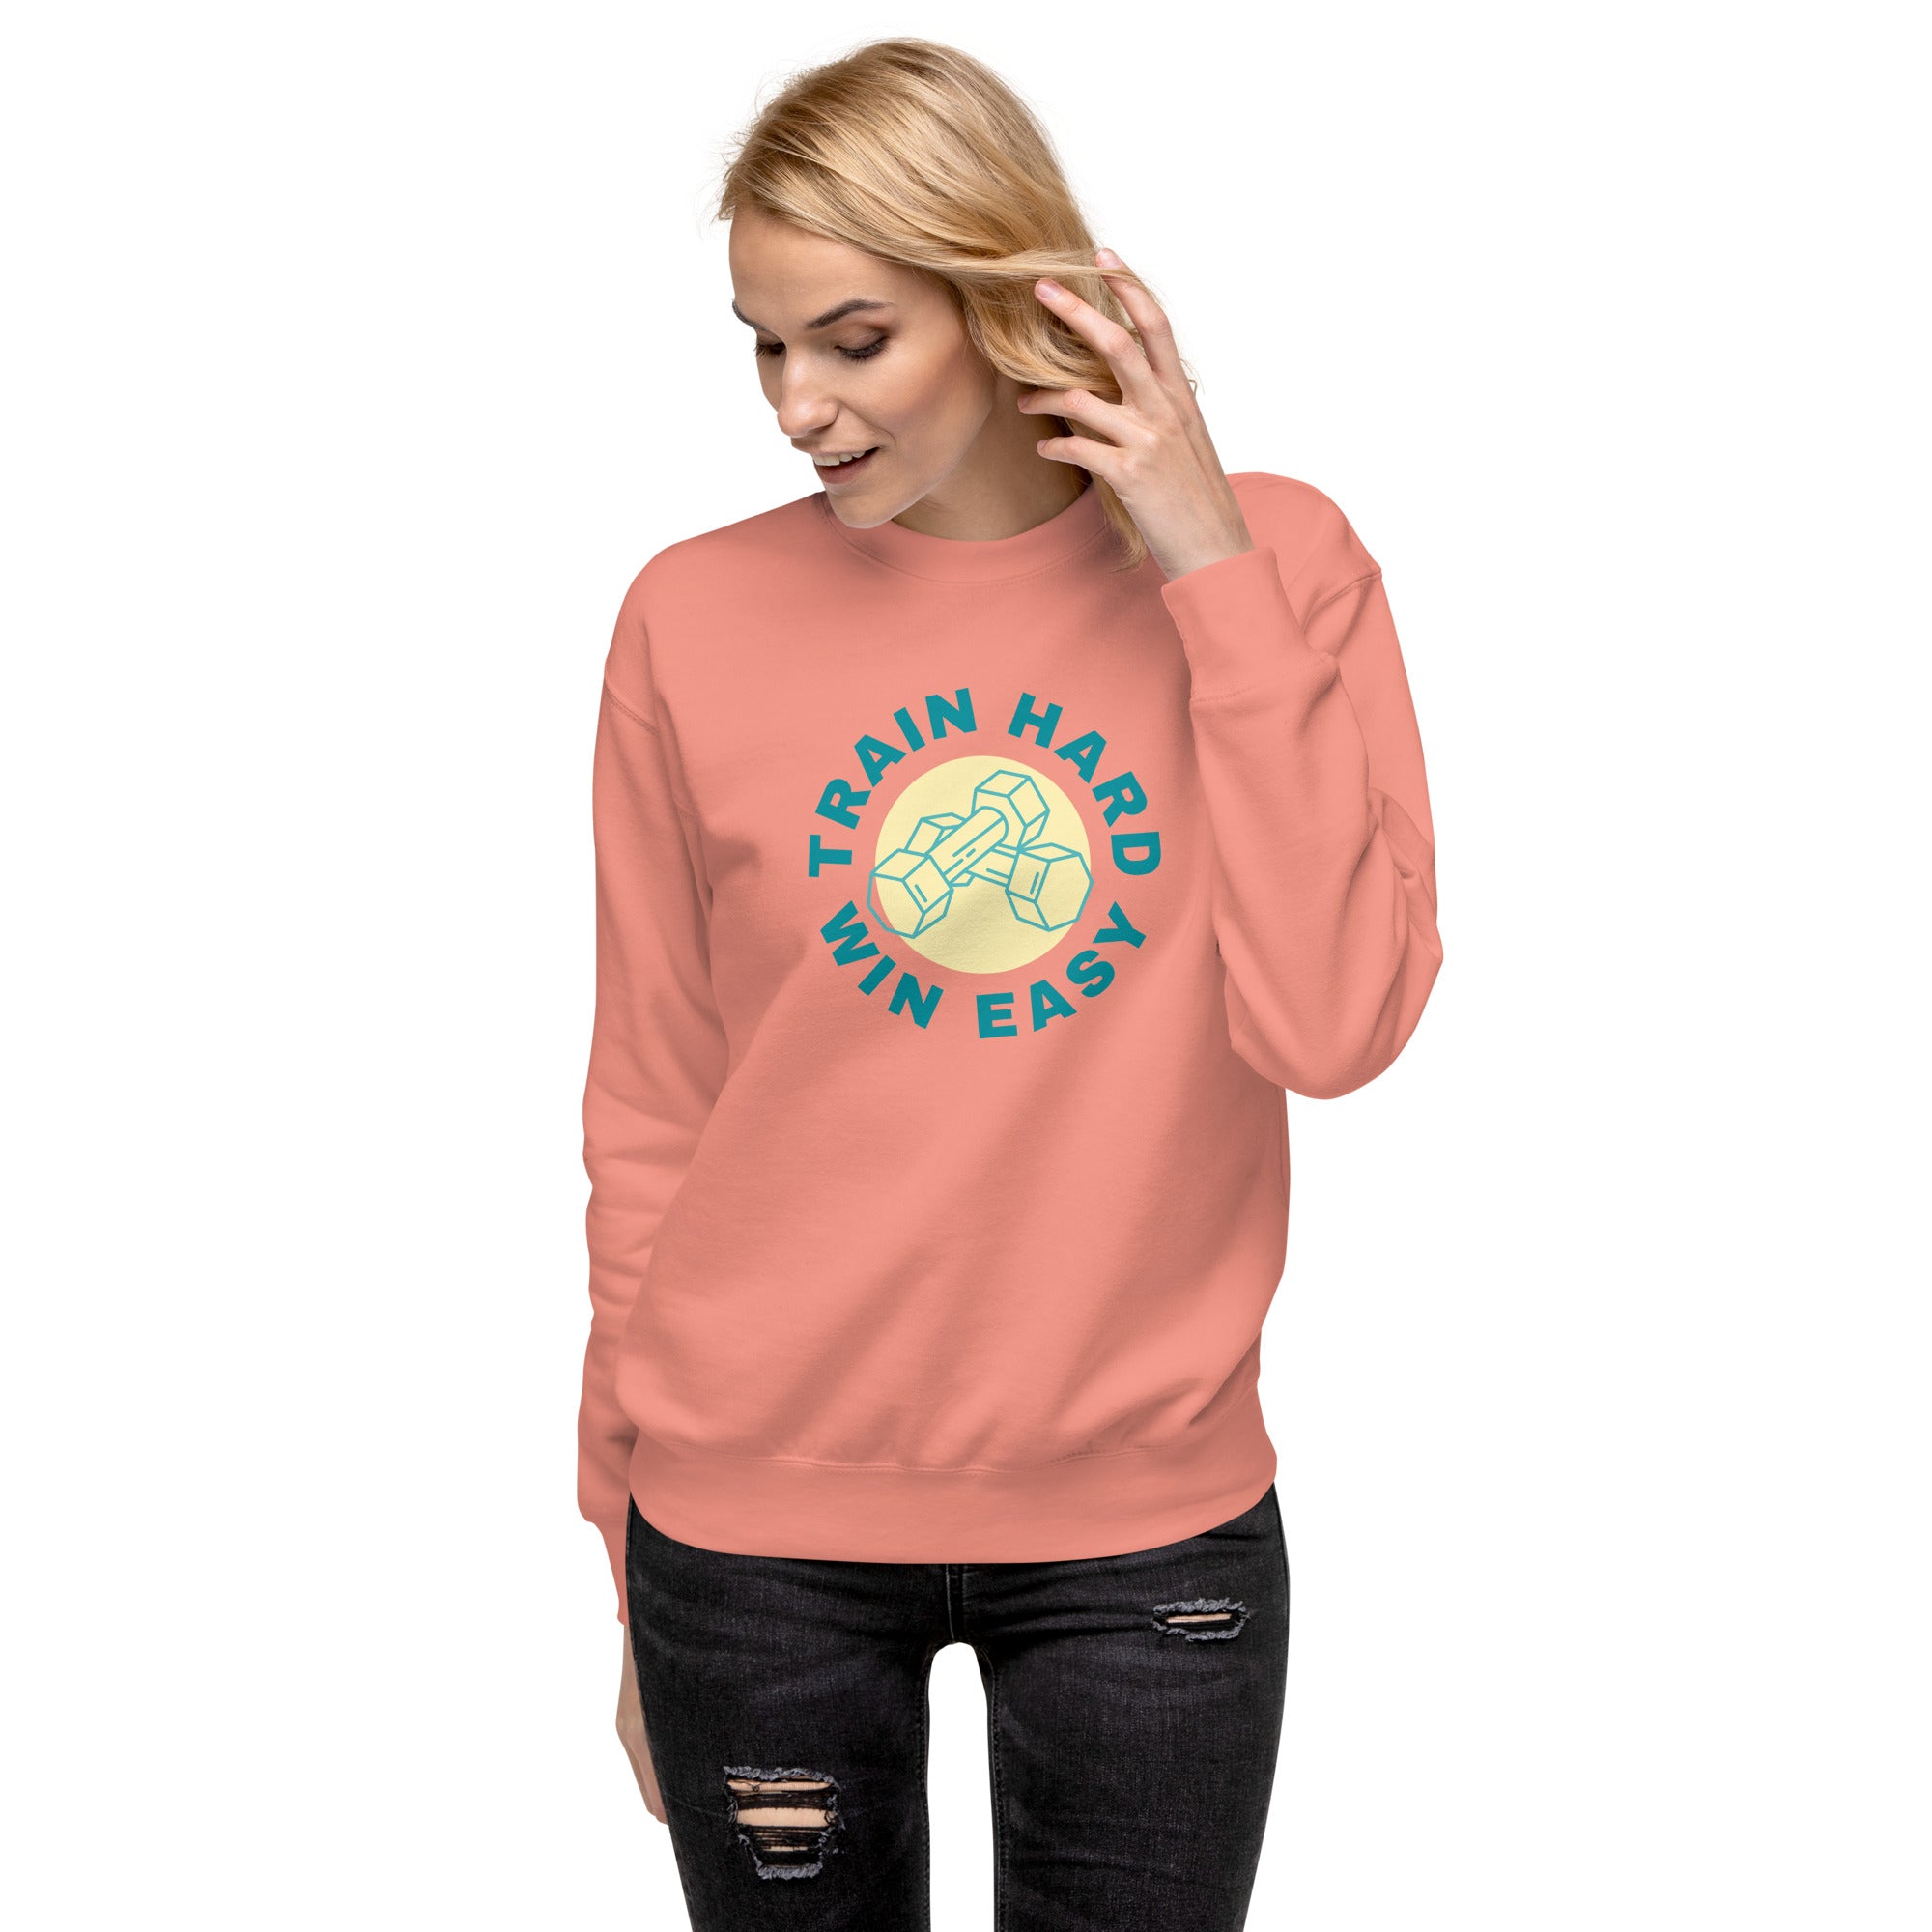 Train Hard Win Easy Women's Premium Sweatshirt